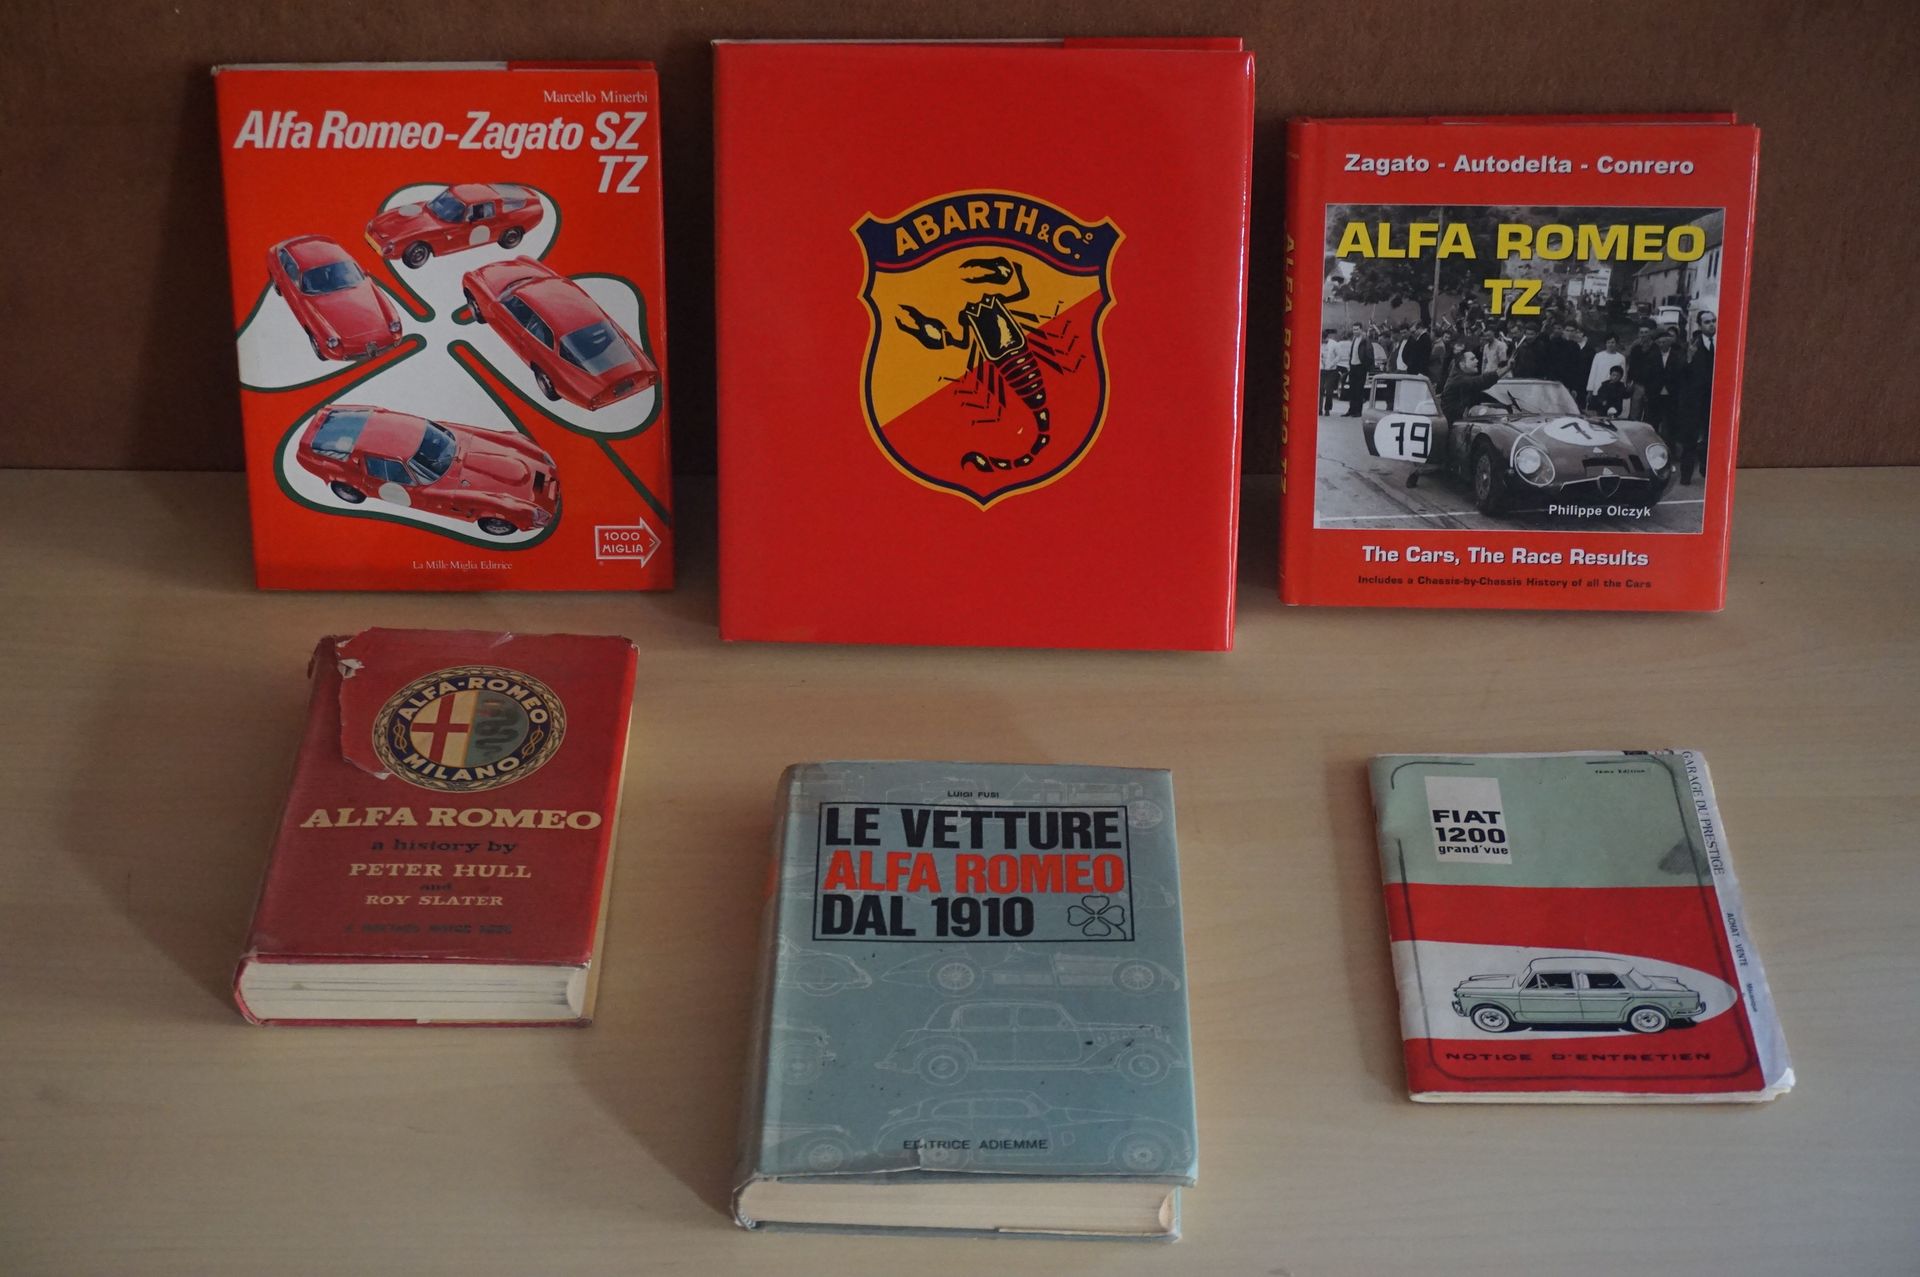 Null Lot de 6 livres 
- Alfa Romeo - Zagato SZ / TZ
- Abarth
- Alfa Romeo TZ
- A&hellip;